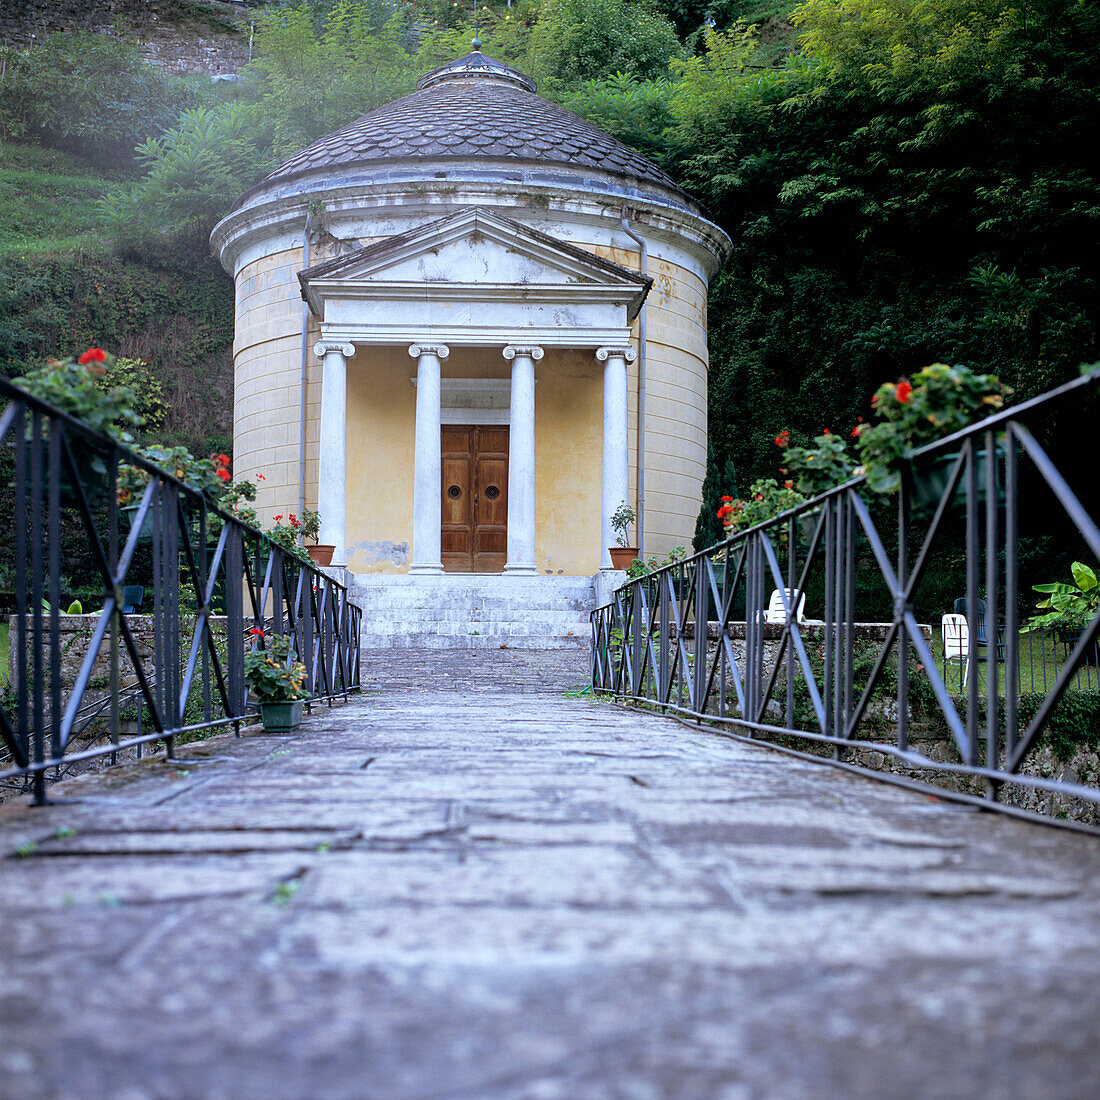 Little temple at Villa Demidoff park, Bagni di Lucca, Garfagnana, Italy